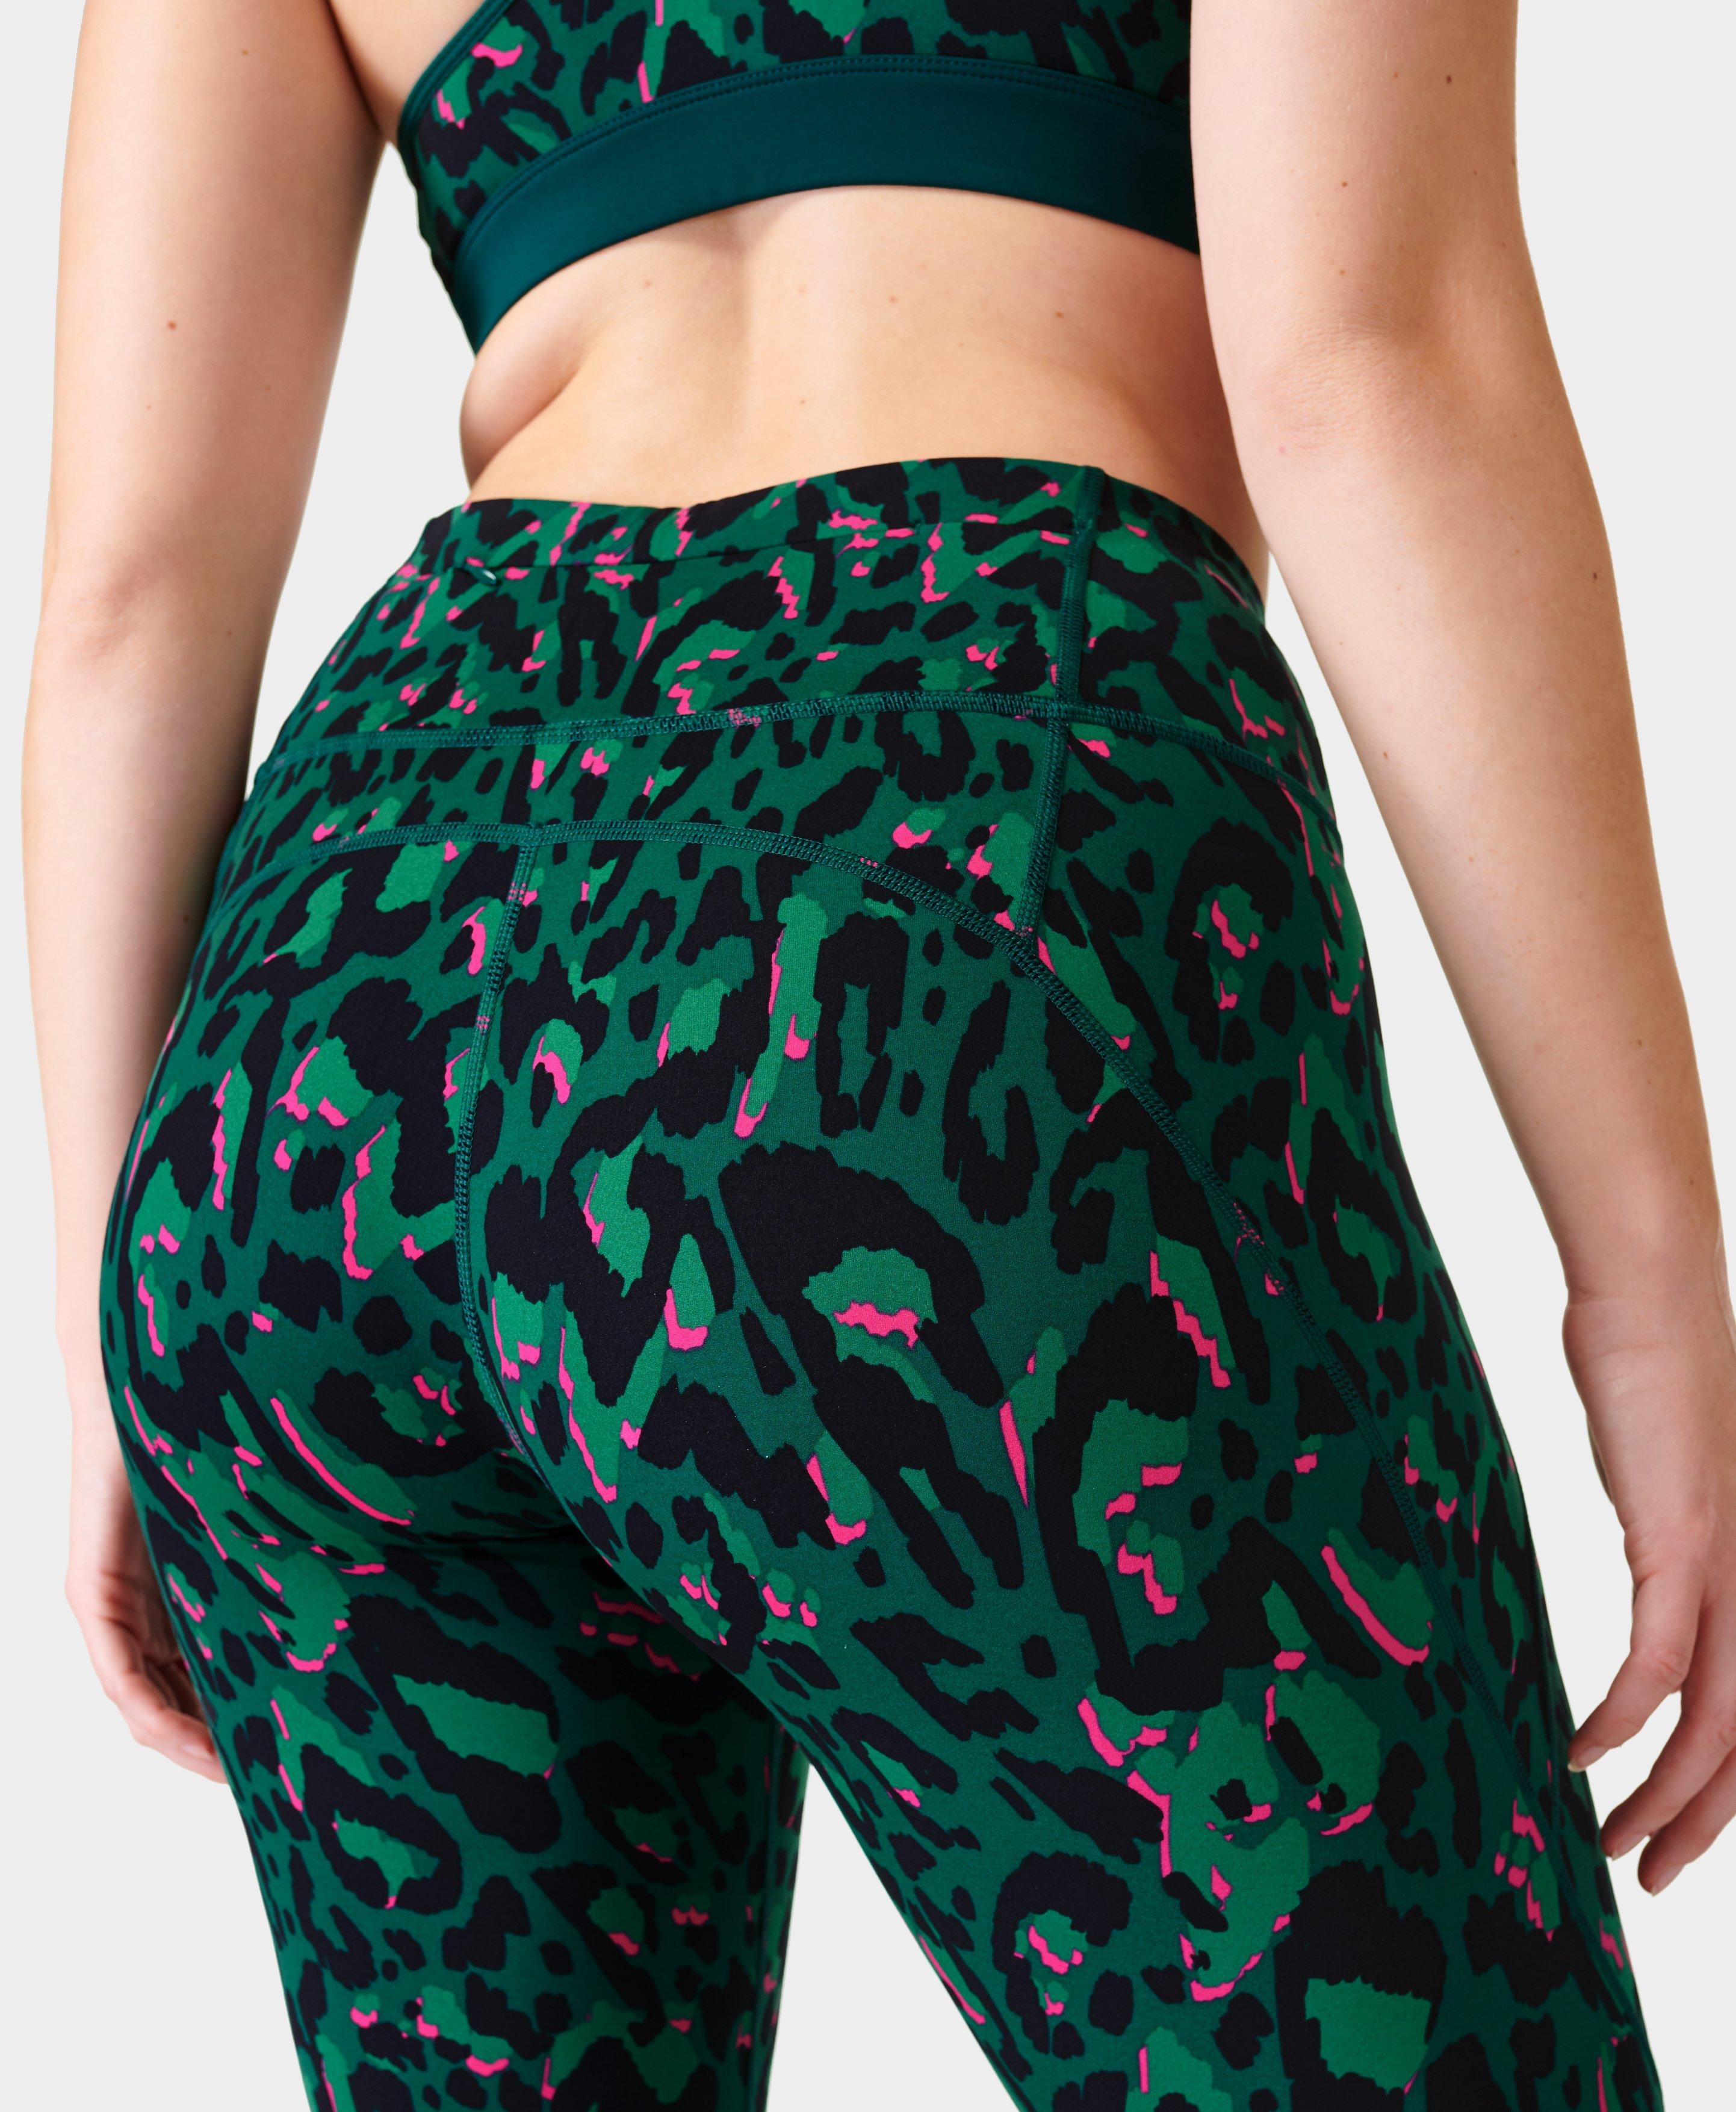 Sweaty Betty Power Gym Leggings, Green Brushed Leopard Print